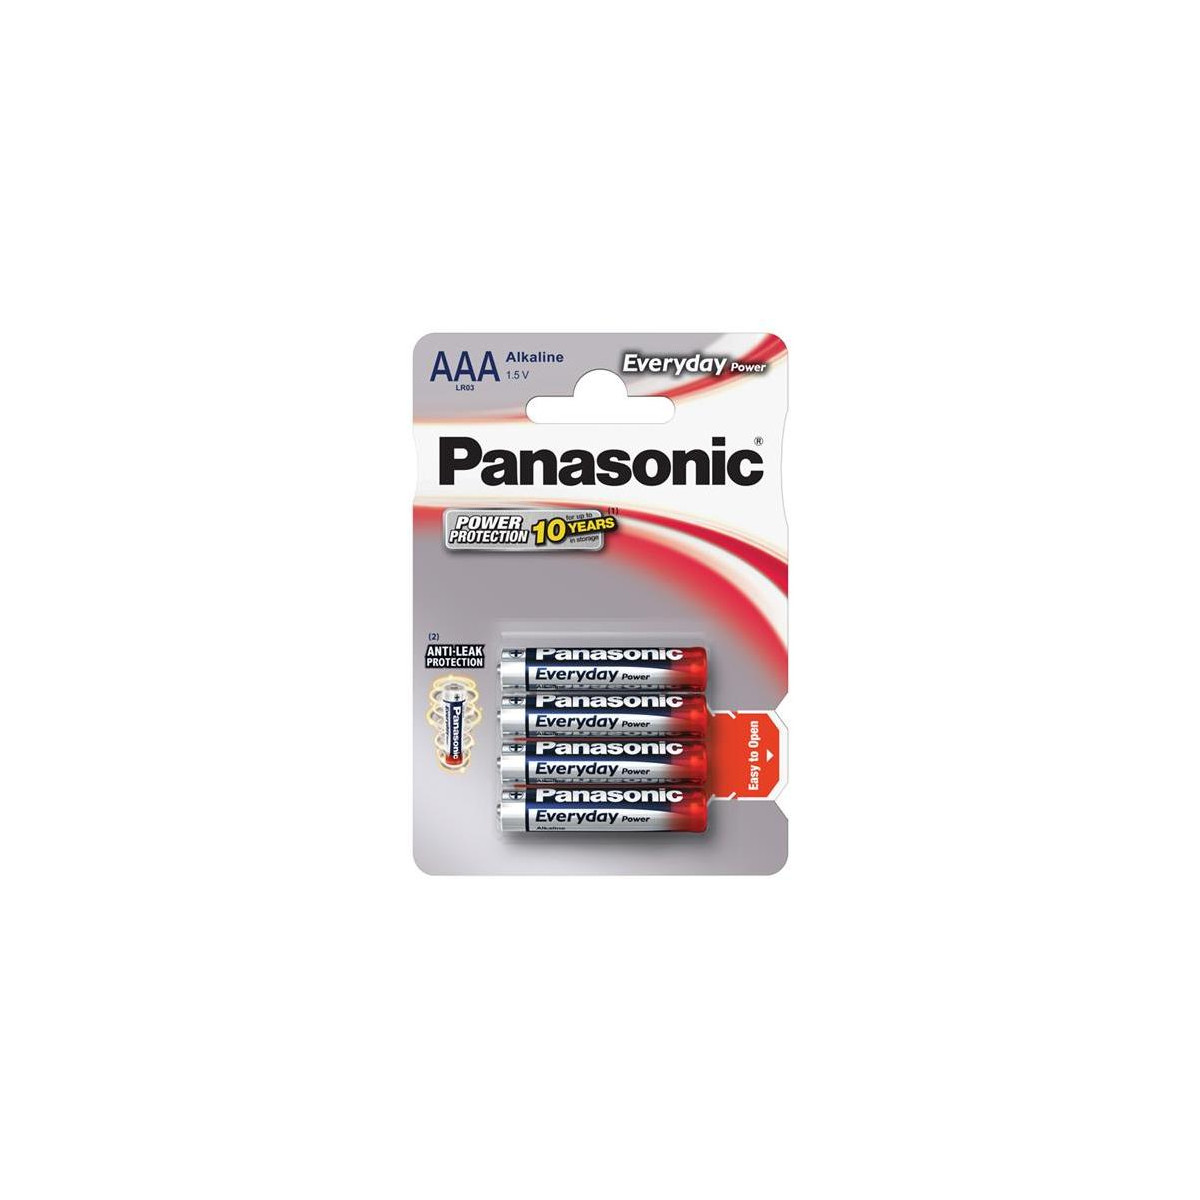 More about Baterie AAA (R03) alkalická PANASONIC Everyday Power 4ks / blistr